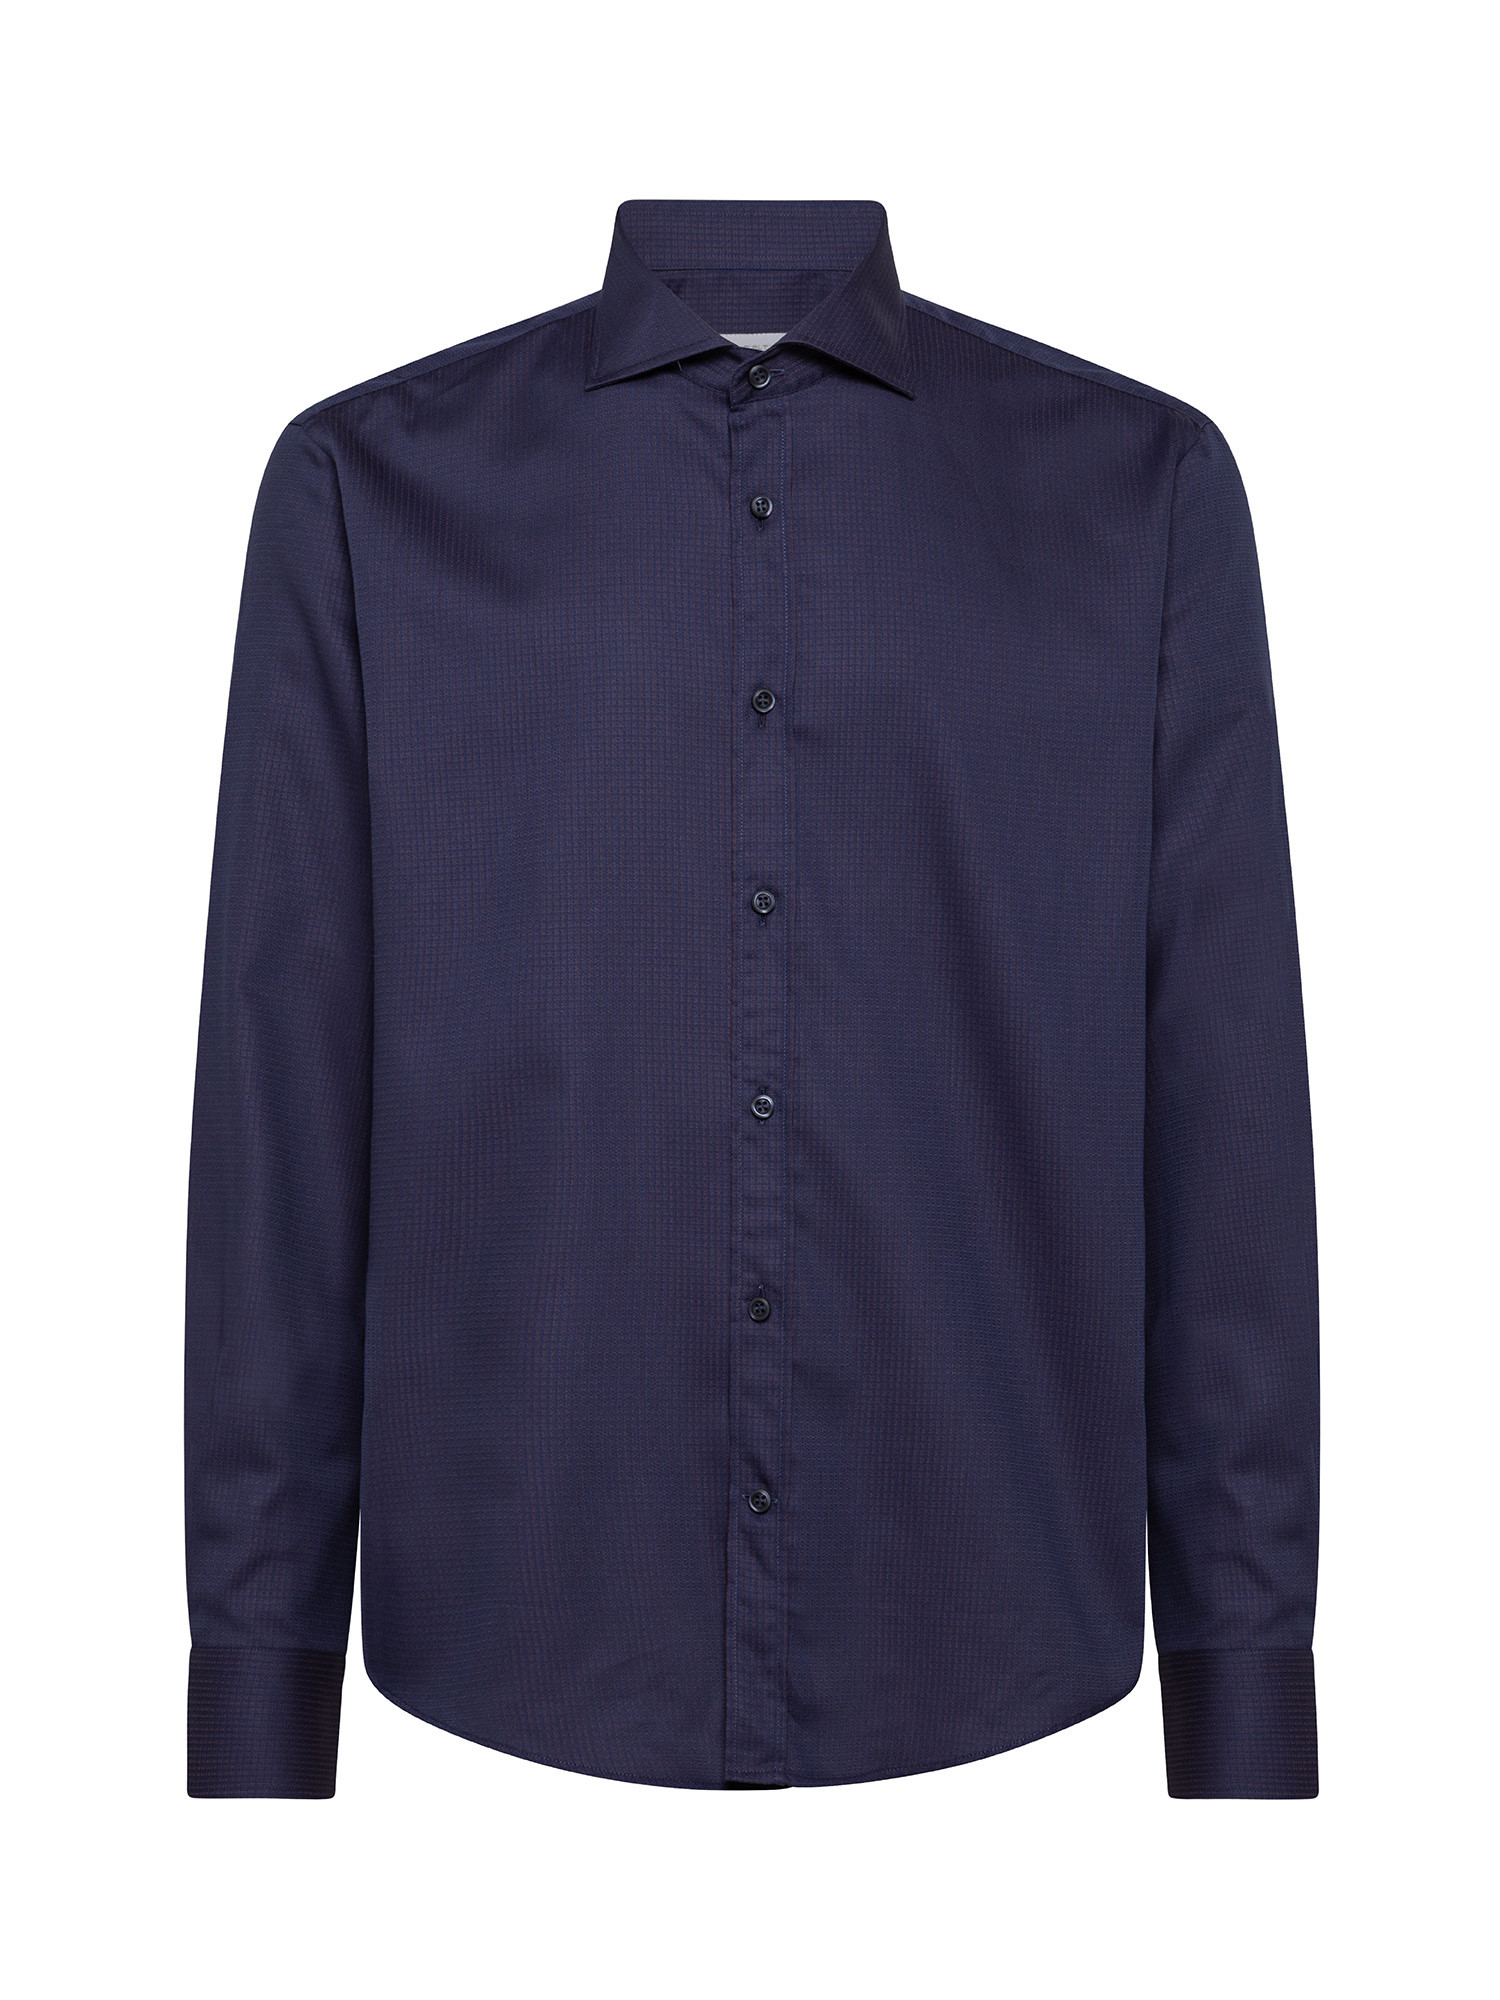 Luca D'Altieri - Tailor fit shirt in pure cotton, Blue 2, large image number 1